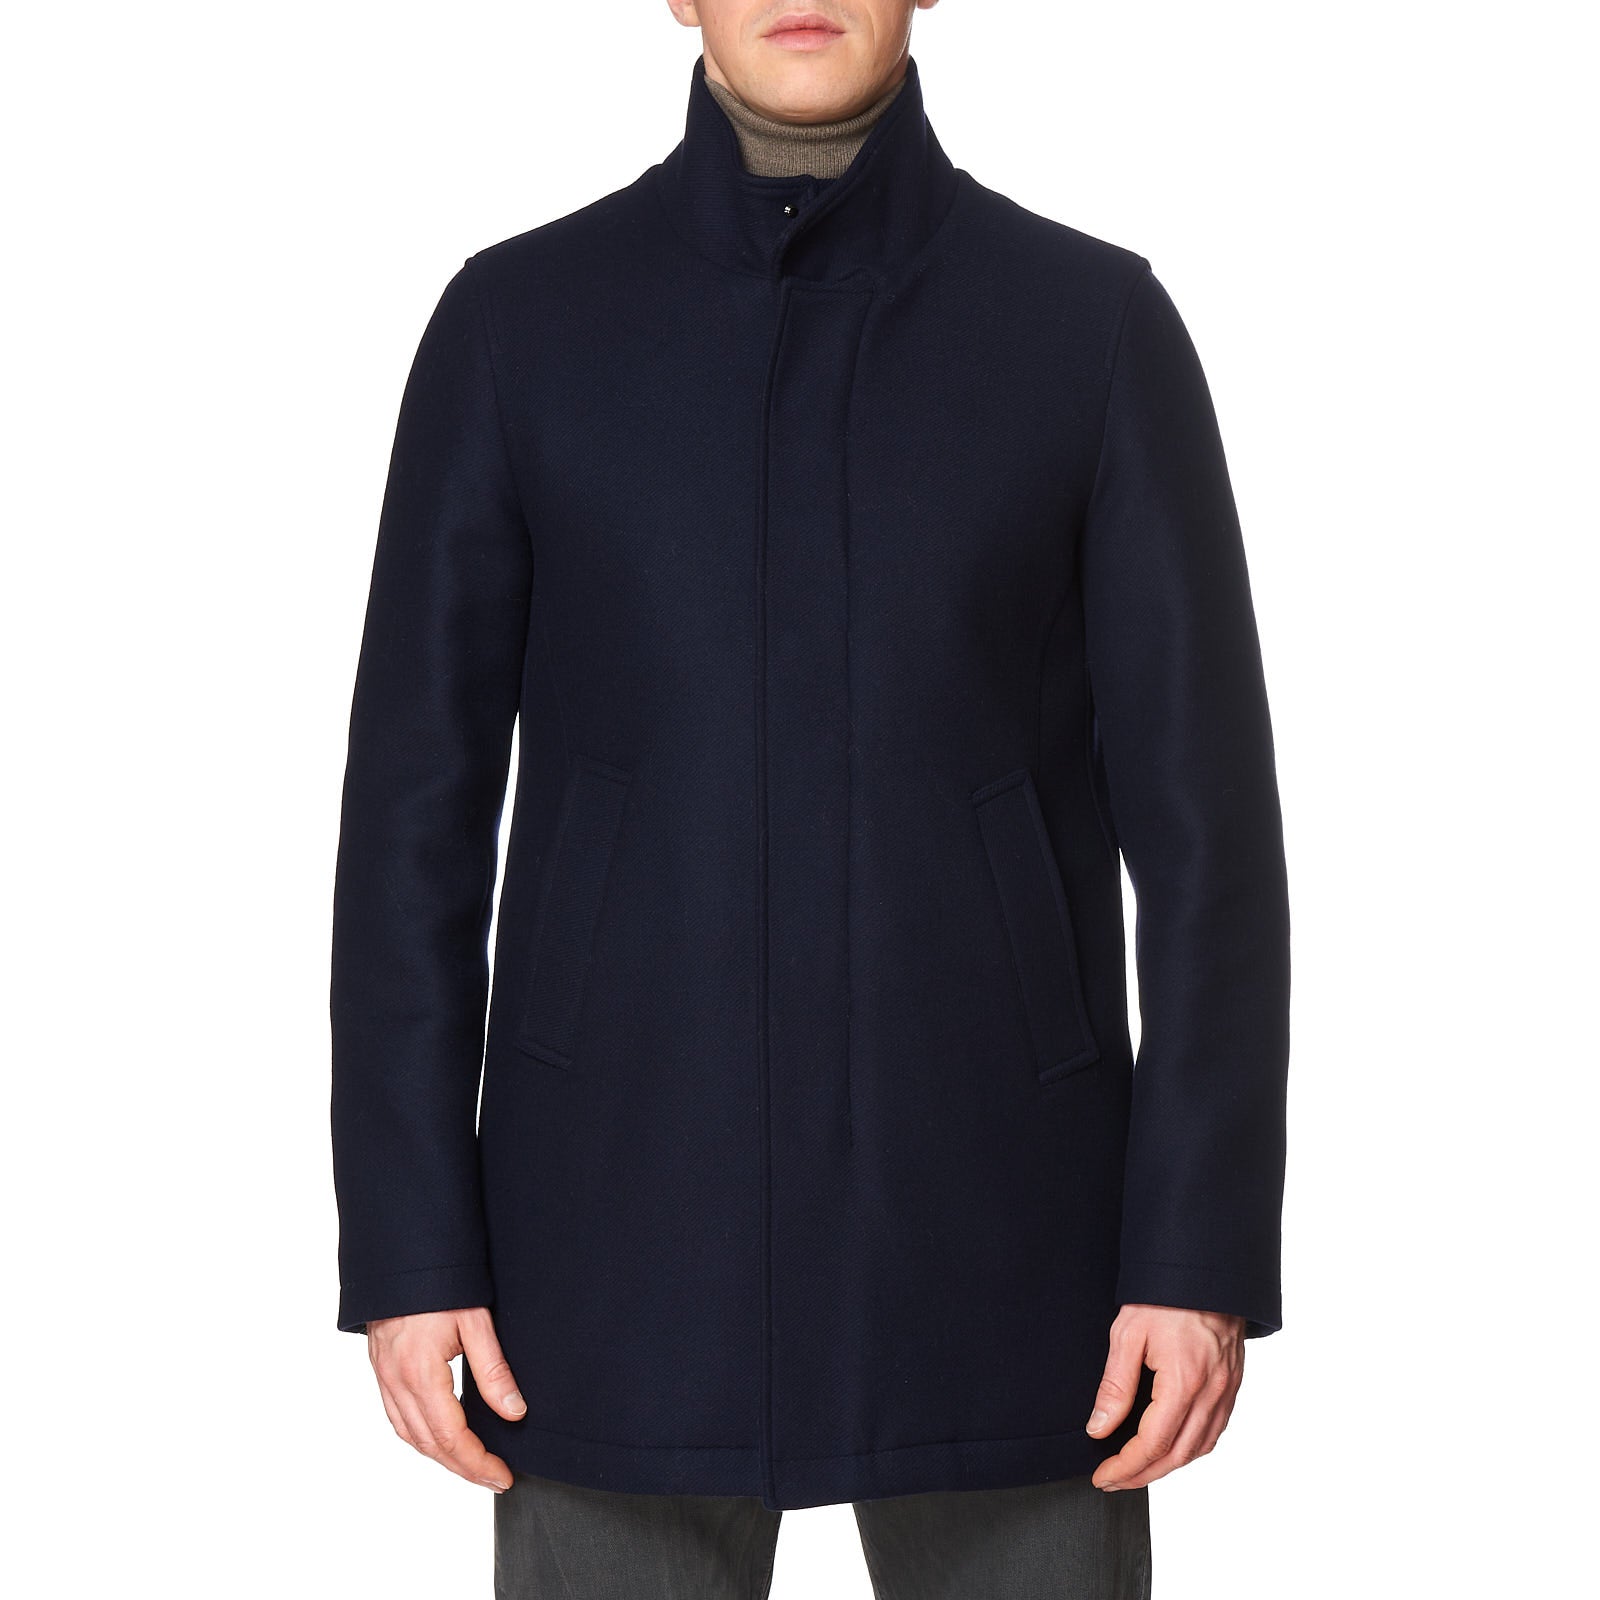 KITON KIRED "Emilius" Blue Virgin Wool-Cashmere Padded Jacket Coat Beaver Collar KIRED